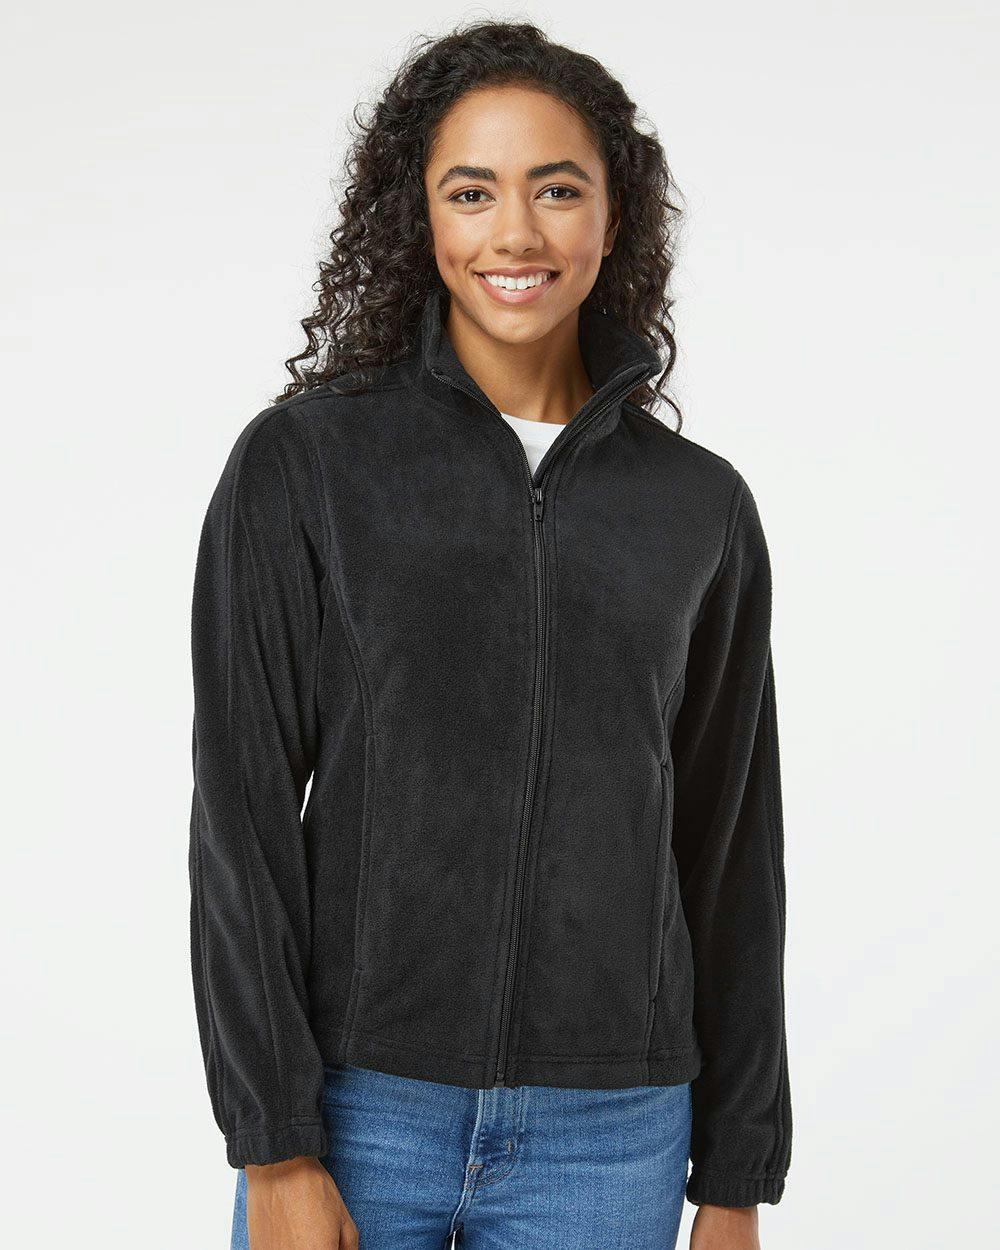 Image for Women's Polar Fleece Full-Zip Jacket - 5062